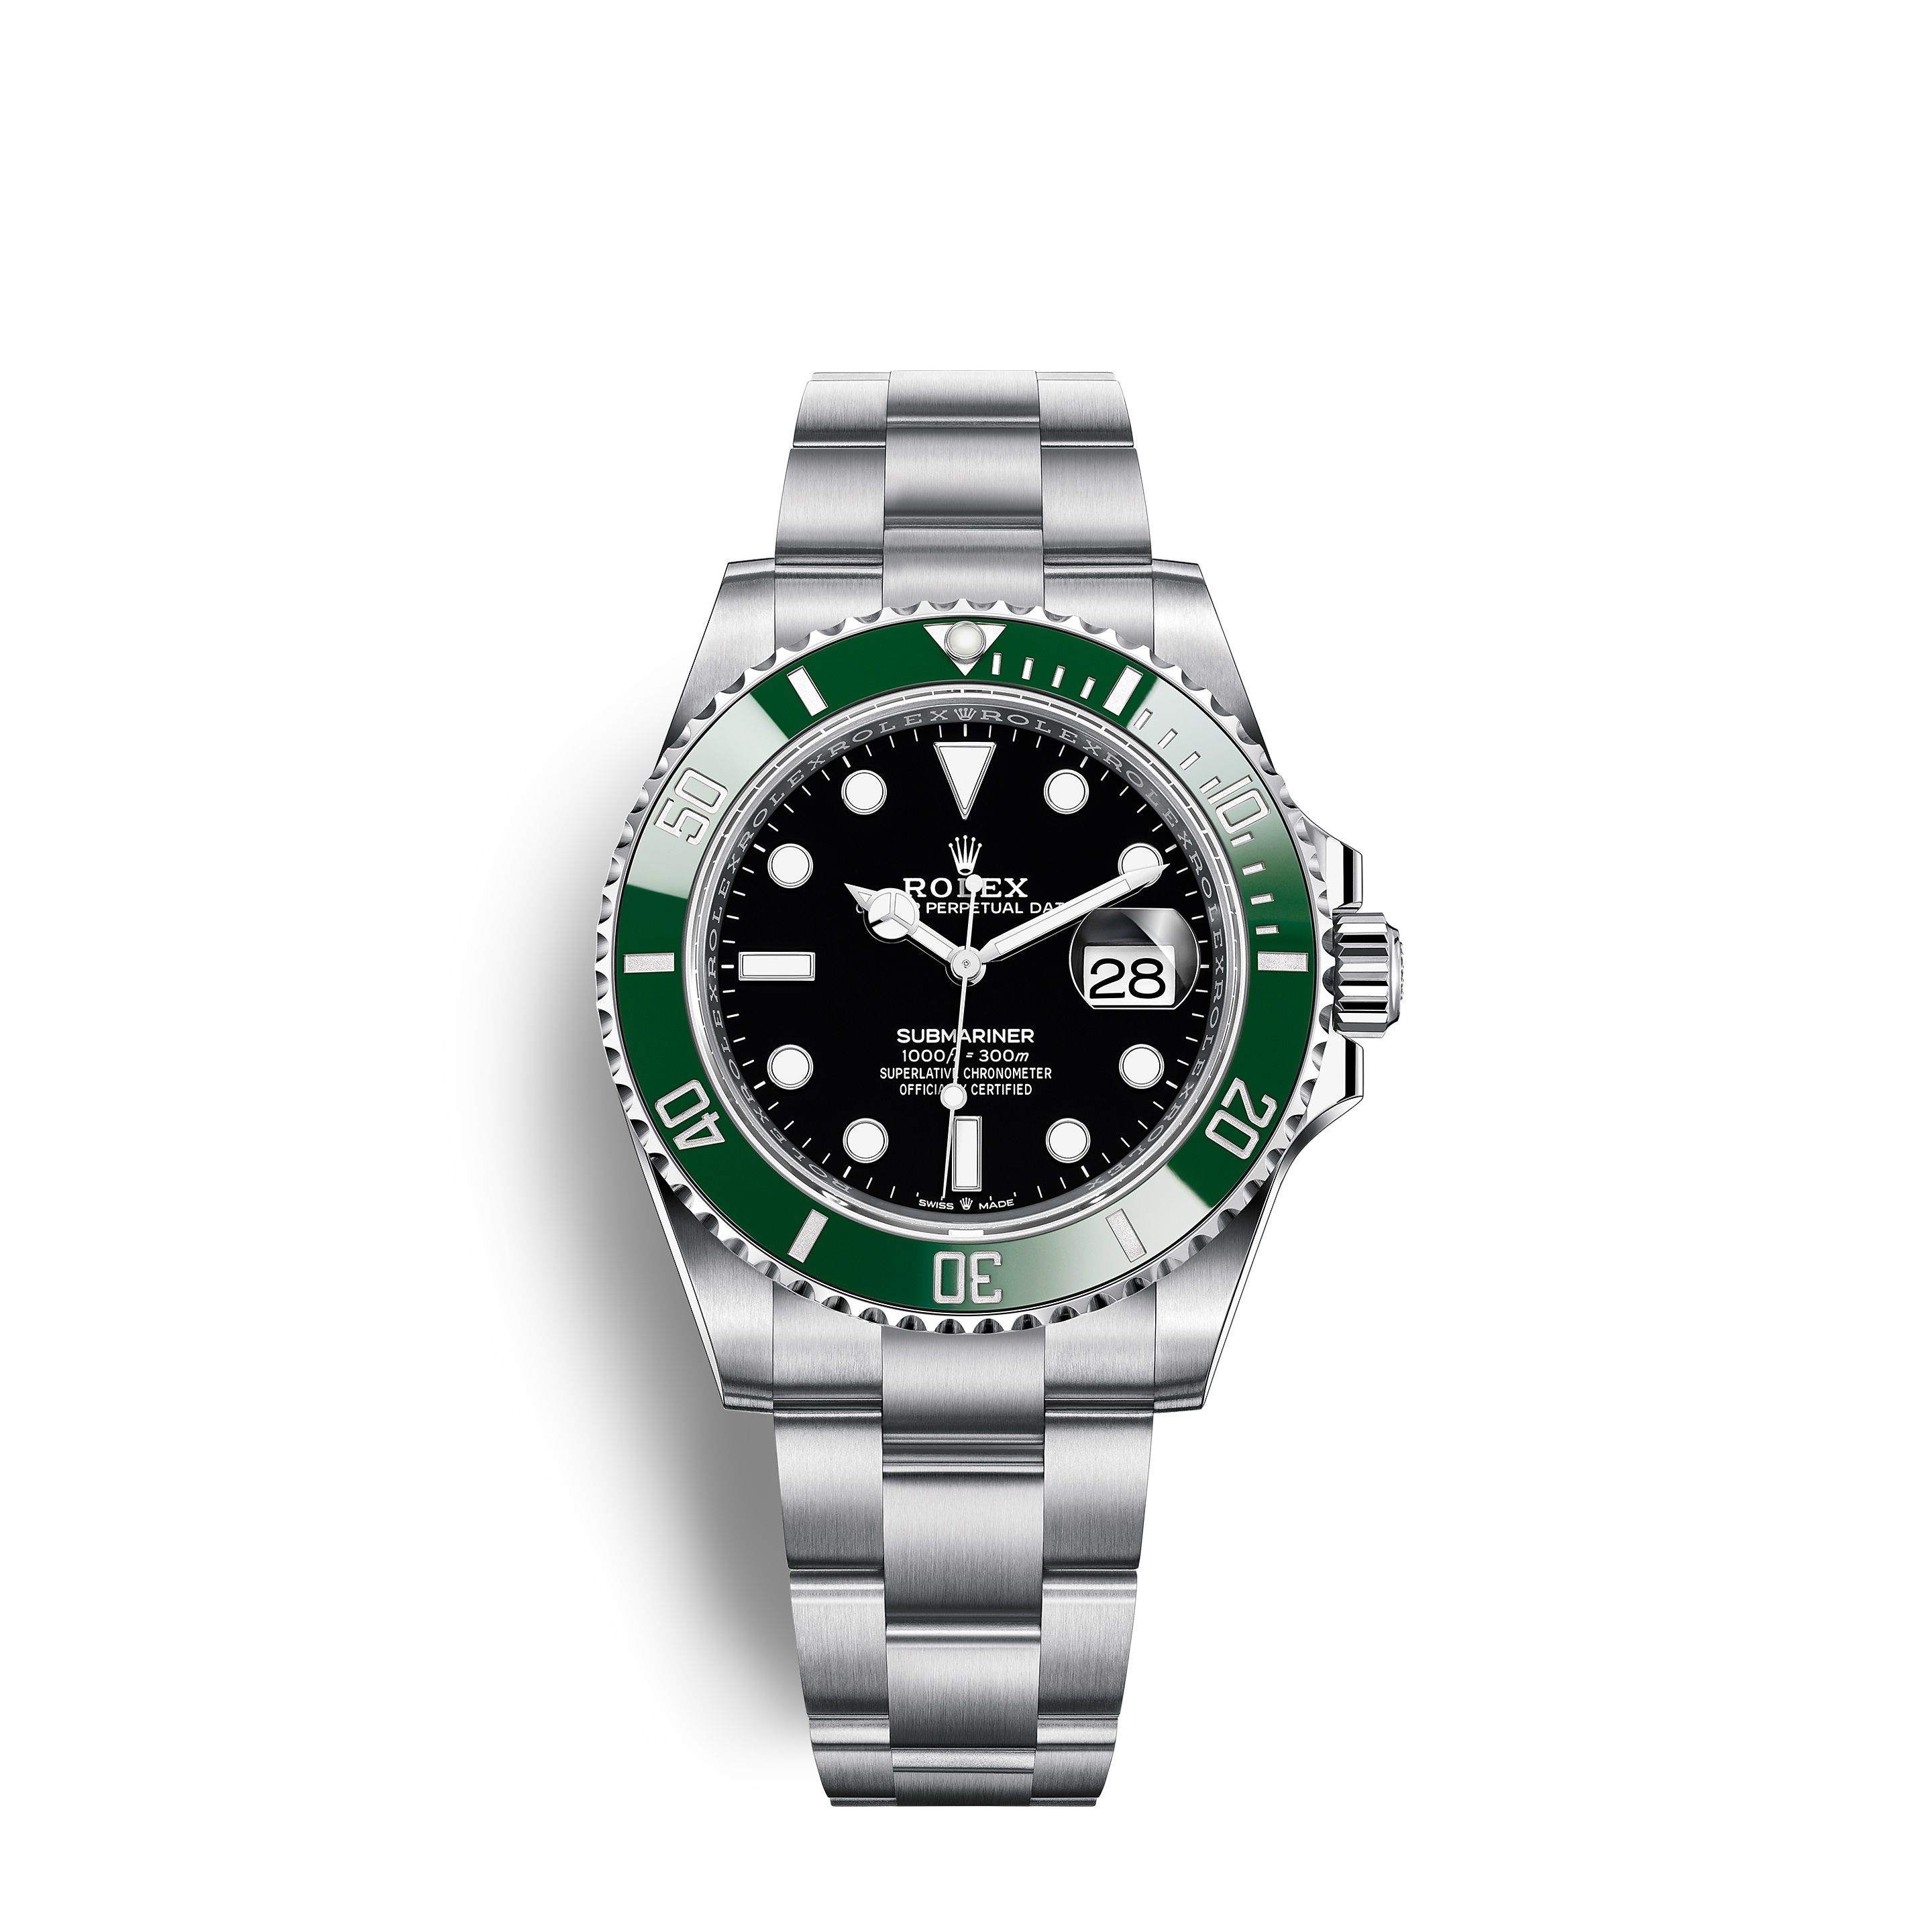 Submariner Date 126610LV Stainless Steel Watch (Black)